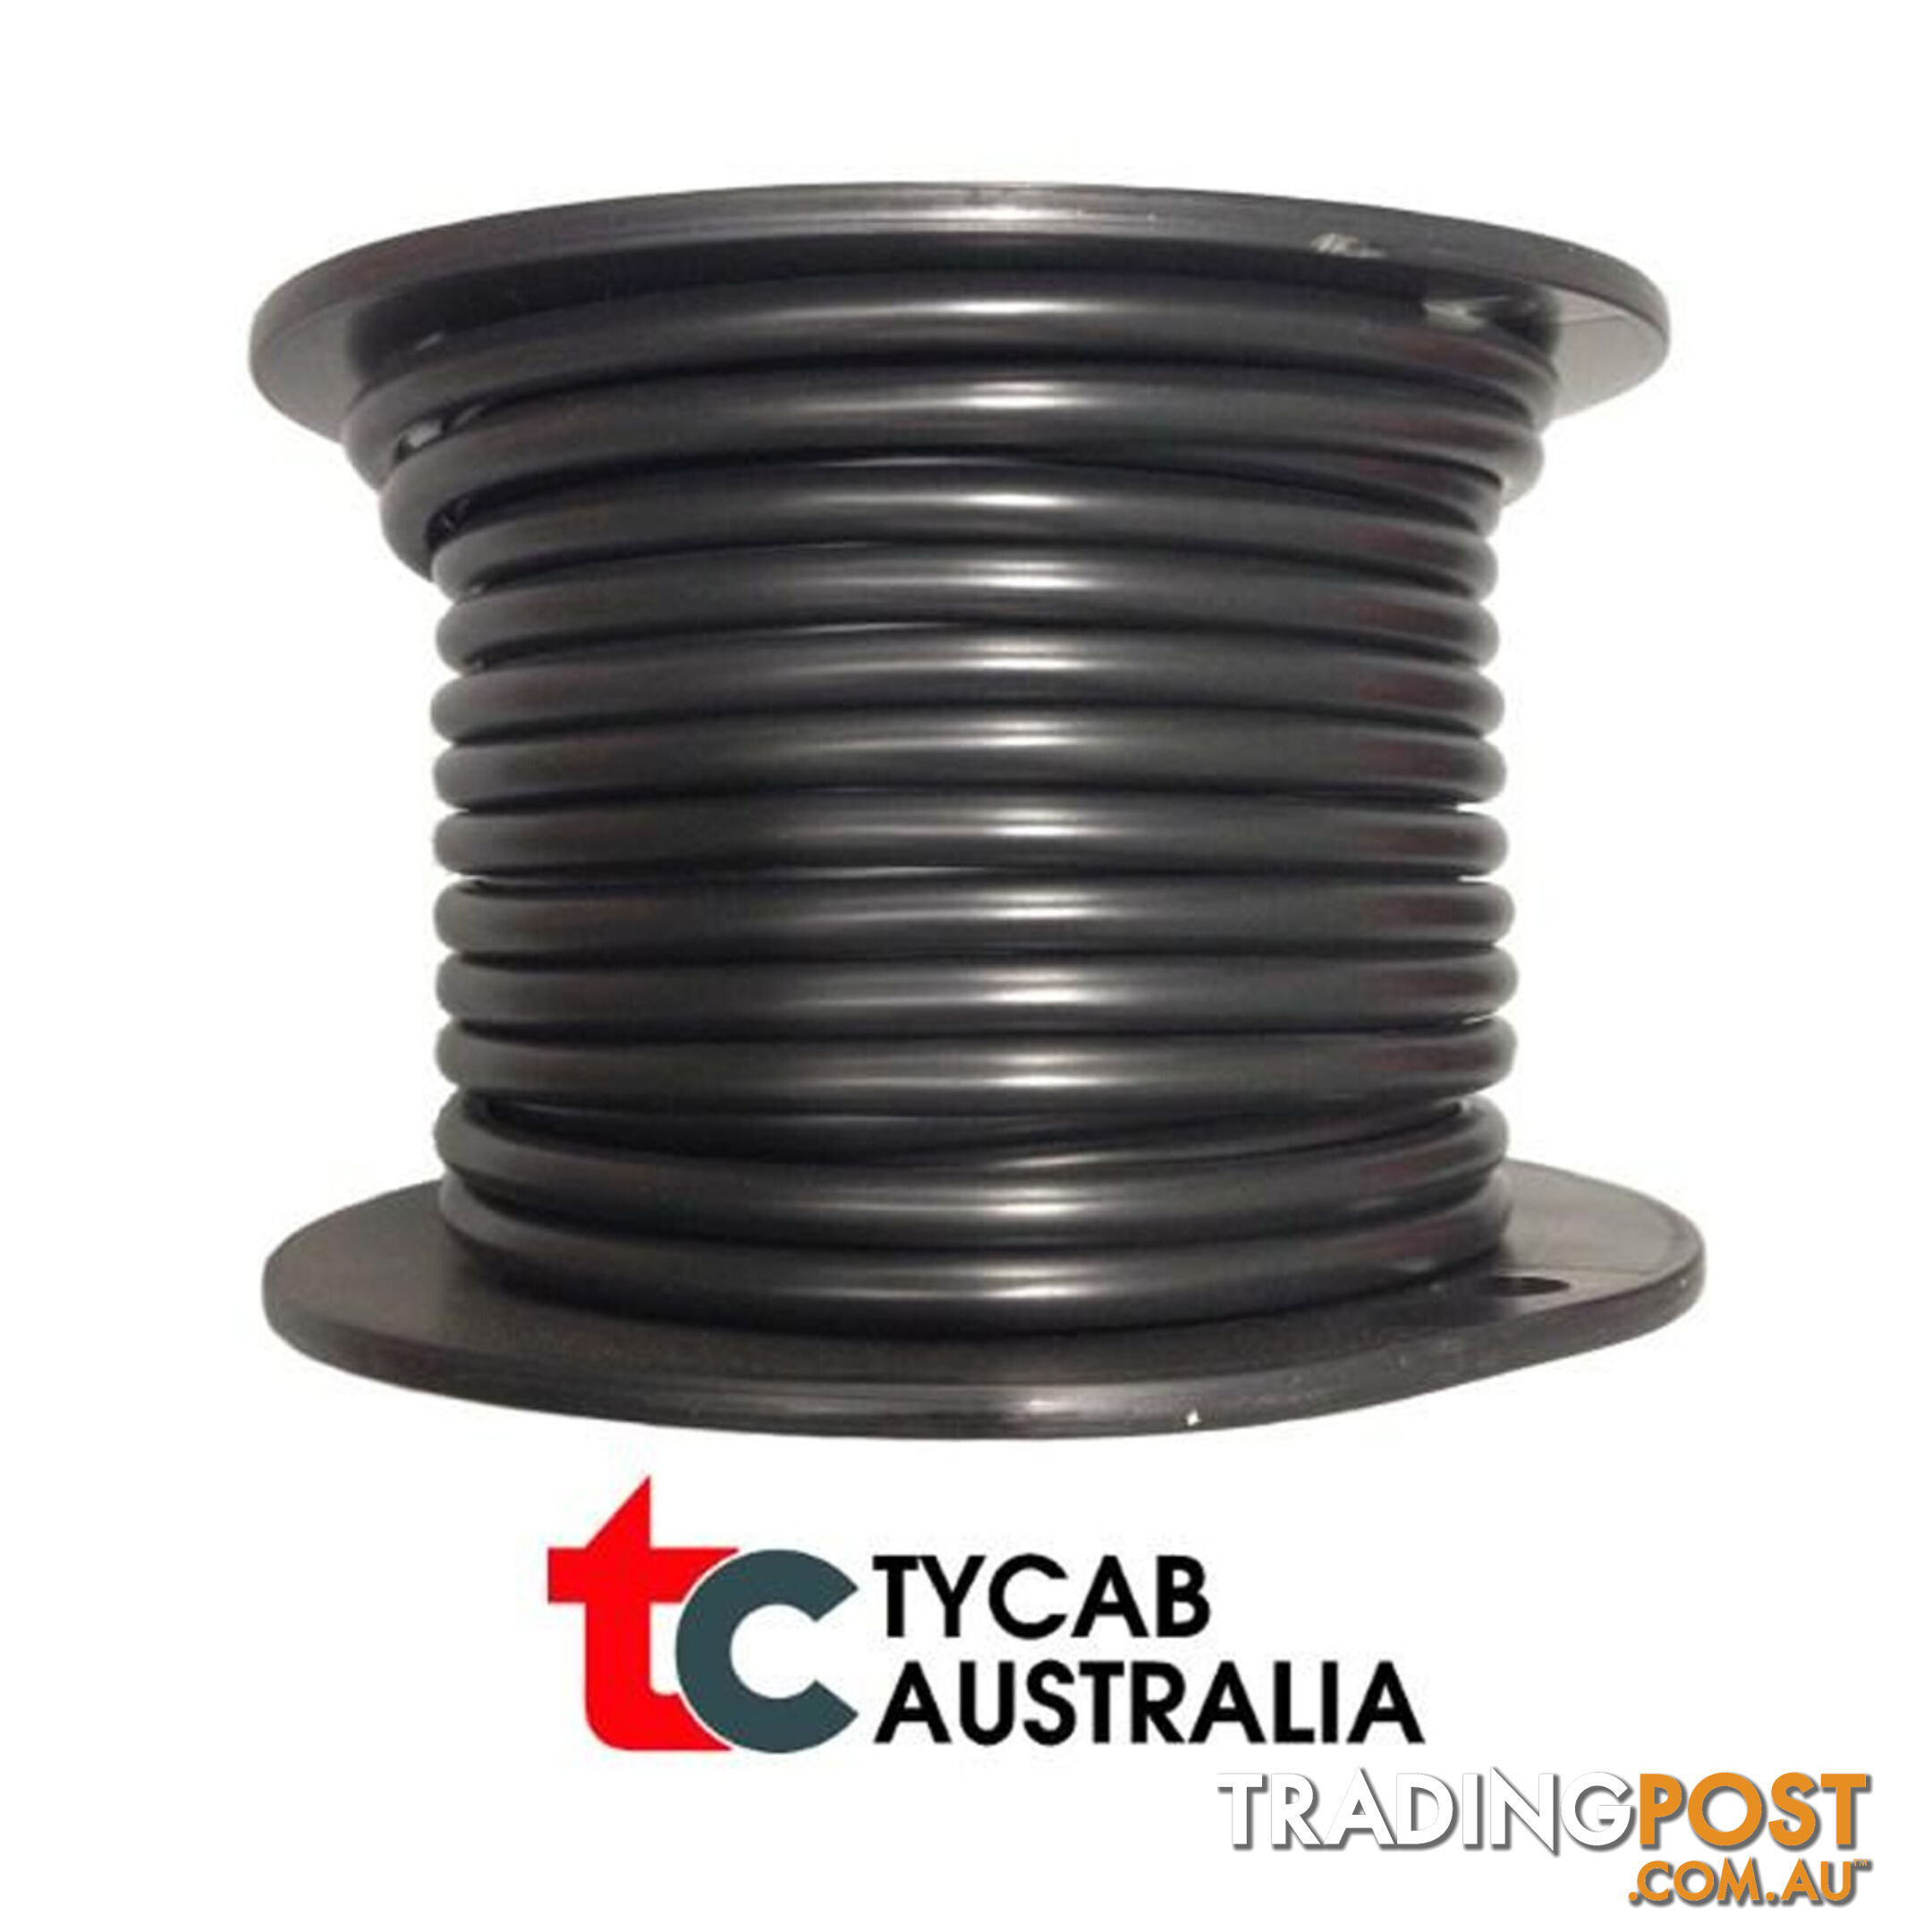 2 B S (35mm2) 188 amp Copper Cable Single Core Aussie Made SKU - TYCAB ABC145503BK-100m, TYCAB ABC145503BK-30m, TYCAB ABC145503BK-20m, TYCAB ABC145503BK-15m, TYCAB ABC145503BK-13m, TYCAB ABC145503BK-12m, TYCAB ABC145503BK-10m, TYCAB ABC145503BK-8m, TYCAB ABC145503BK-8m, TYCAB ABC145503BK-6m, TYCAB ABC145503BK-5m, TYCAB ABC145503BK-3m, TYCAB ABC145503BK-2m, TYCAB ABC145503BK-1m, TYCAB ABC145503BK-500mm, ABC145503RD-100m, ABC145503RD-30m, TYCAB ABC145503RD-20m, TYCAB ABC145503RD-15m, TYCAB ABC145503RD-13m, TYCAB ABC145503RD-12m, TYCAB ABC145503RD-10m, TYCAB ABC145503RD-8m TYCAB ABC145503RD-7m, TYCAB ABC145503RD-6m, TYCAB ABC145503RD-5m, TYCAB ABC145503RD-3m, TYCAB ABC145503RD-2m, TYCAB ABC145503RD-1m, TYCAB ABC145503RD-500mm, TYCAB ABC145503RD-300mm, TYCAB ABC145503BK-300mm